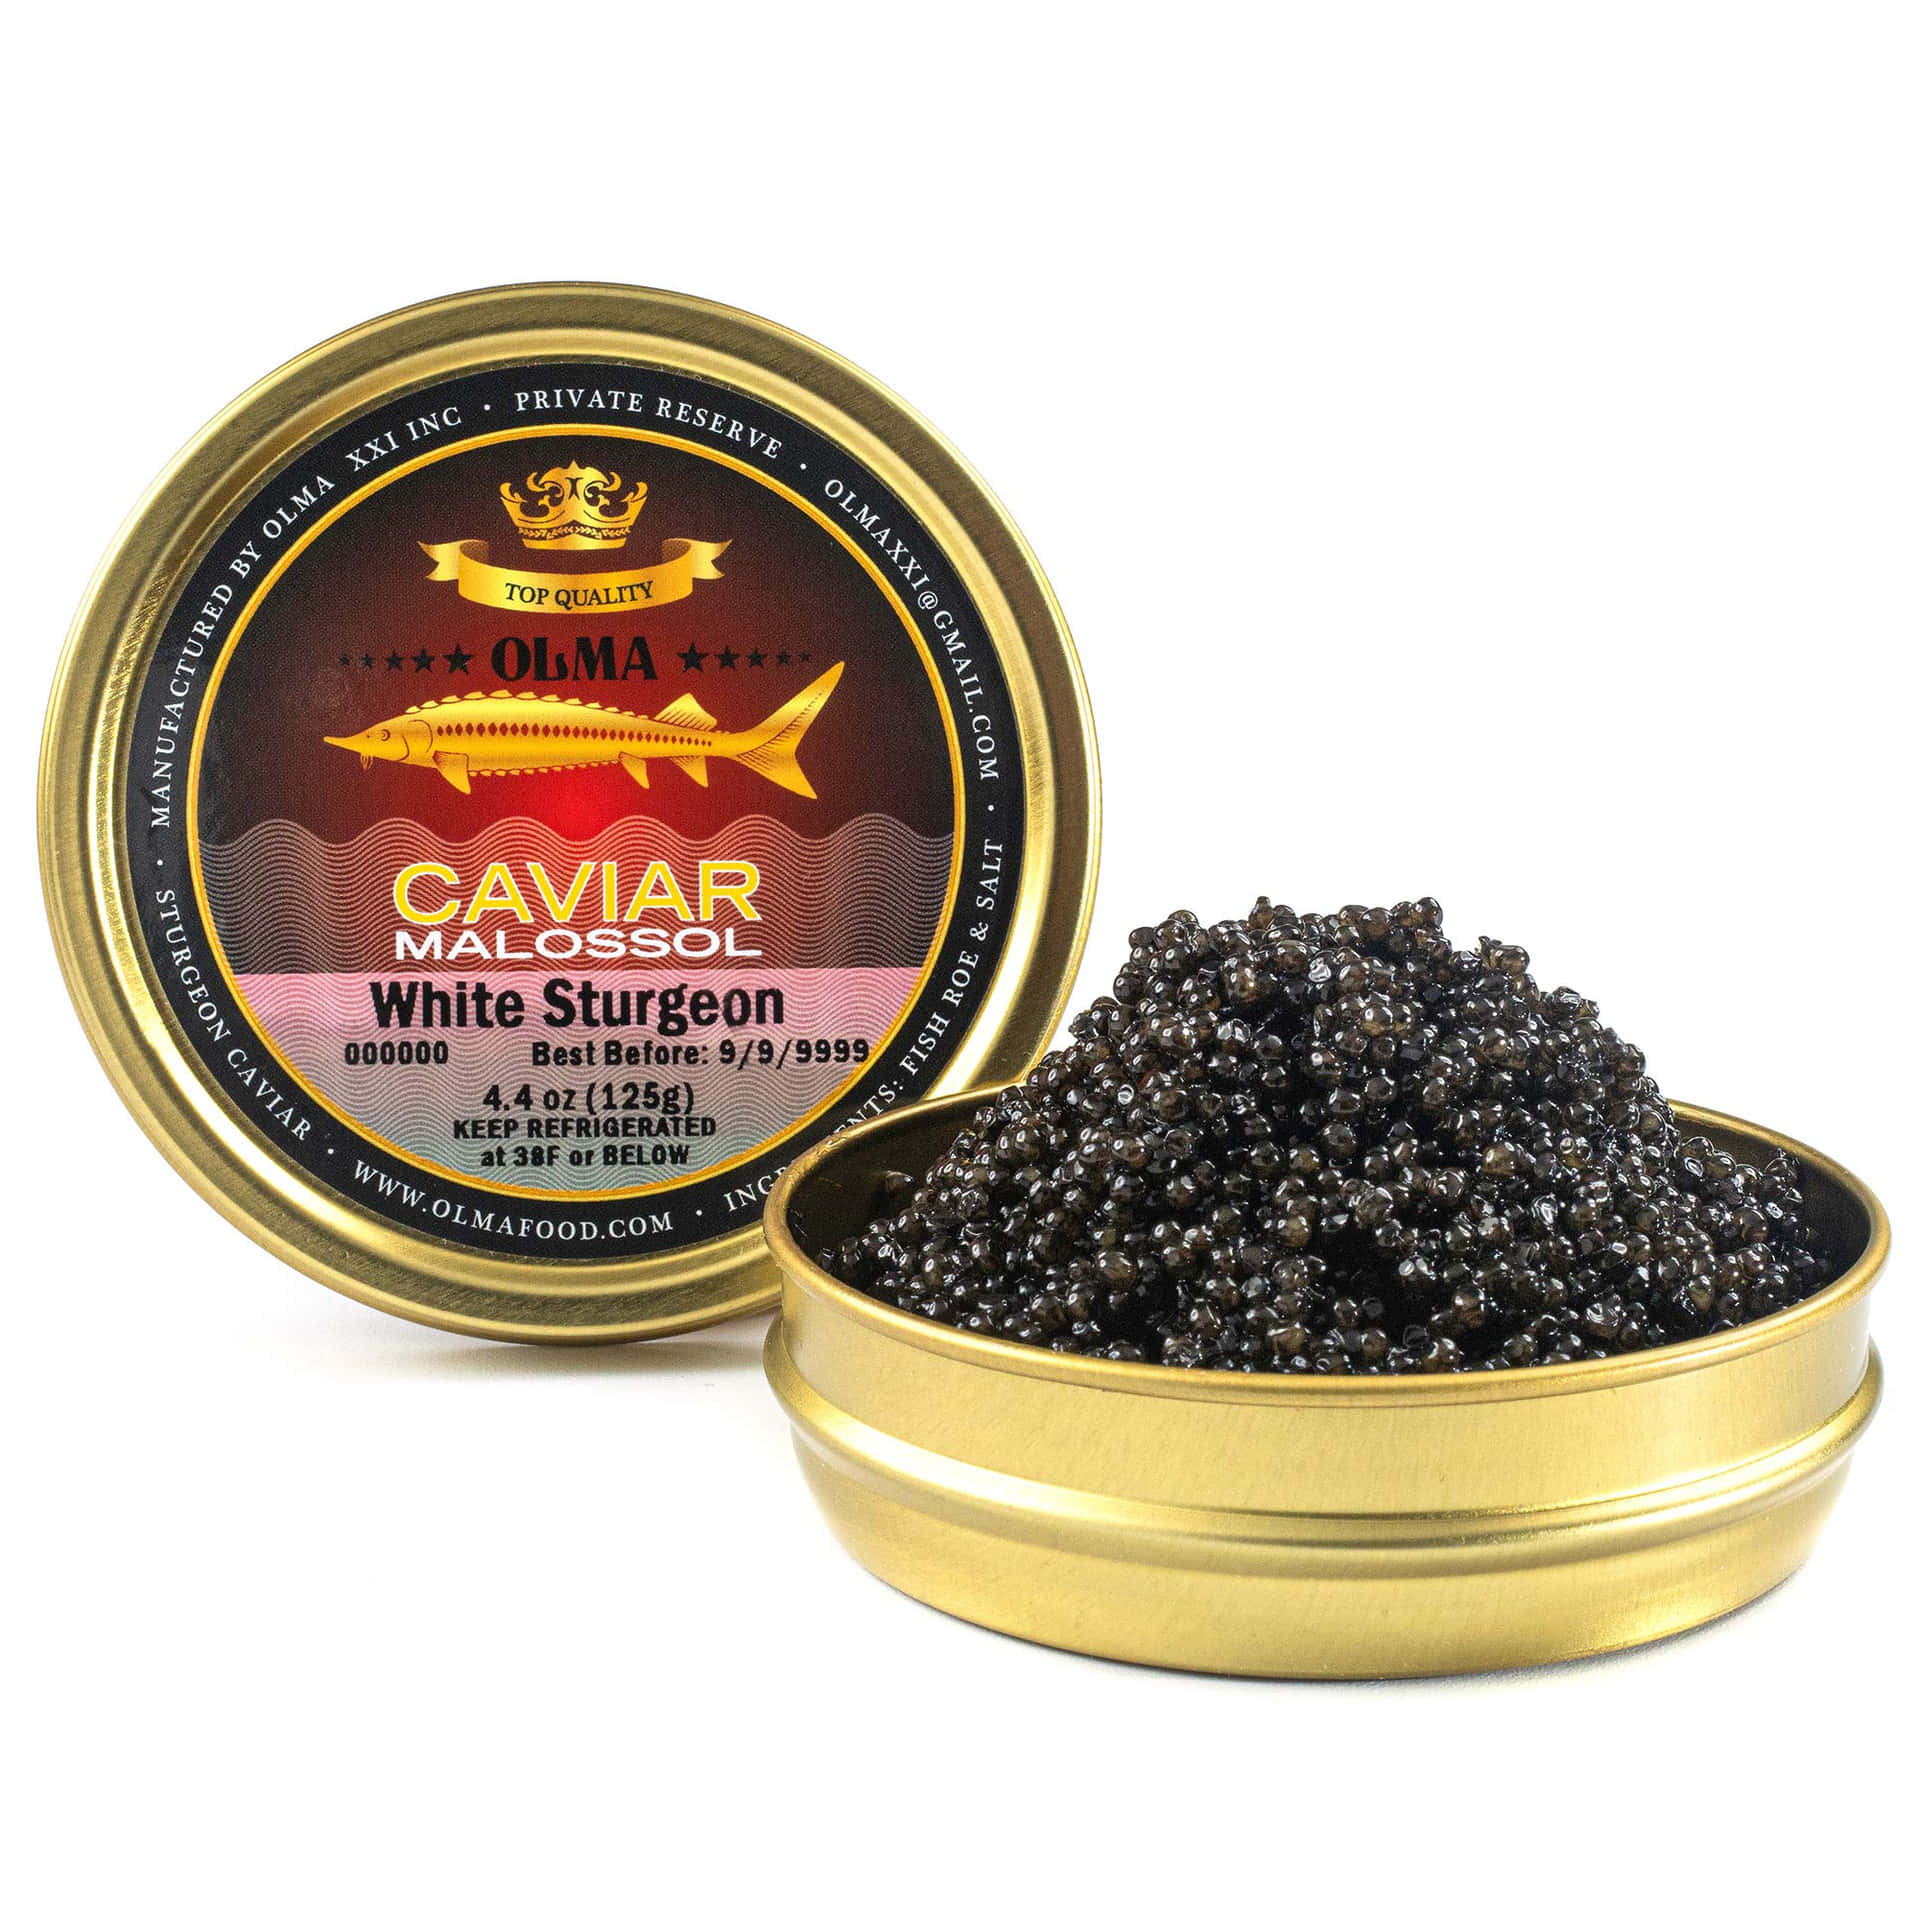 The legendary racehorse, Black Caviar Wallpaper